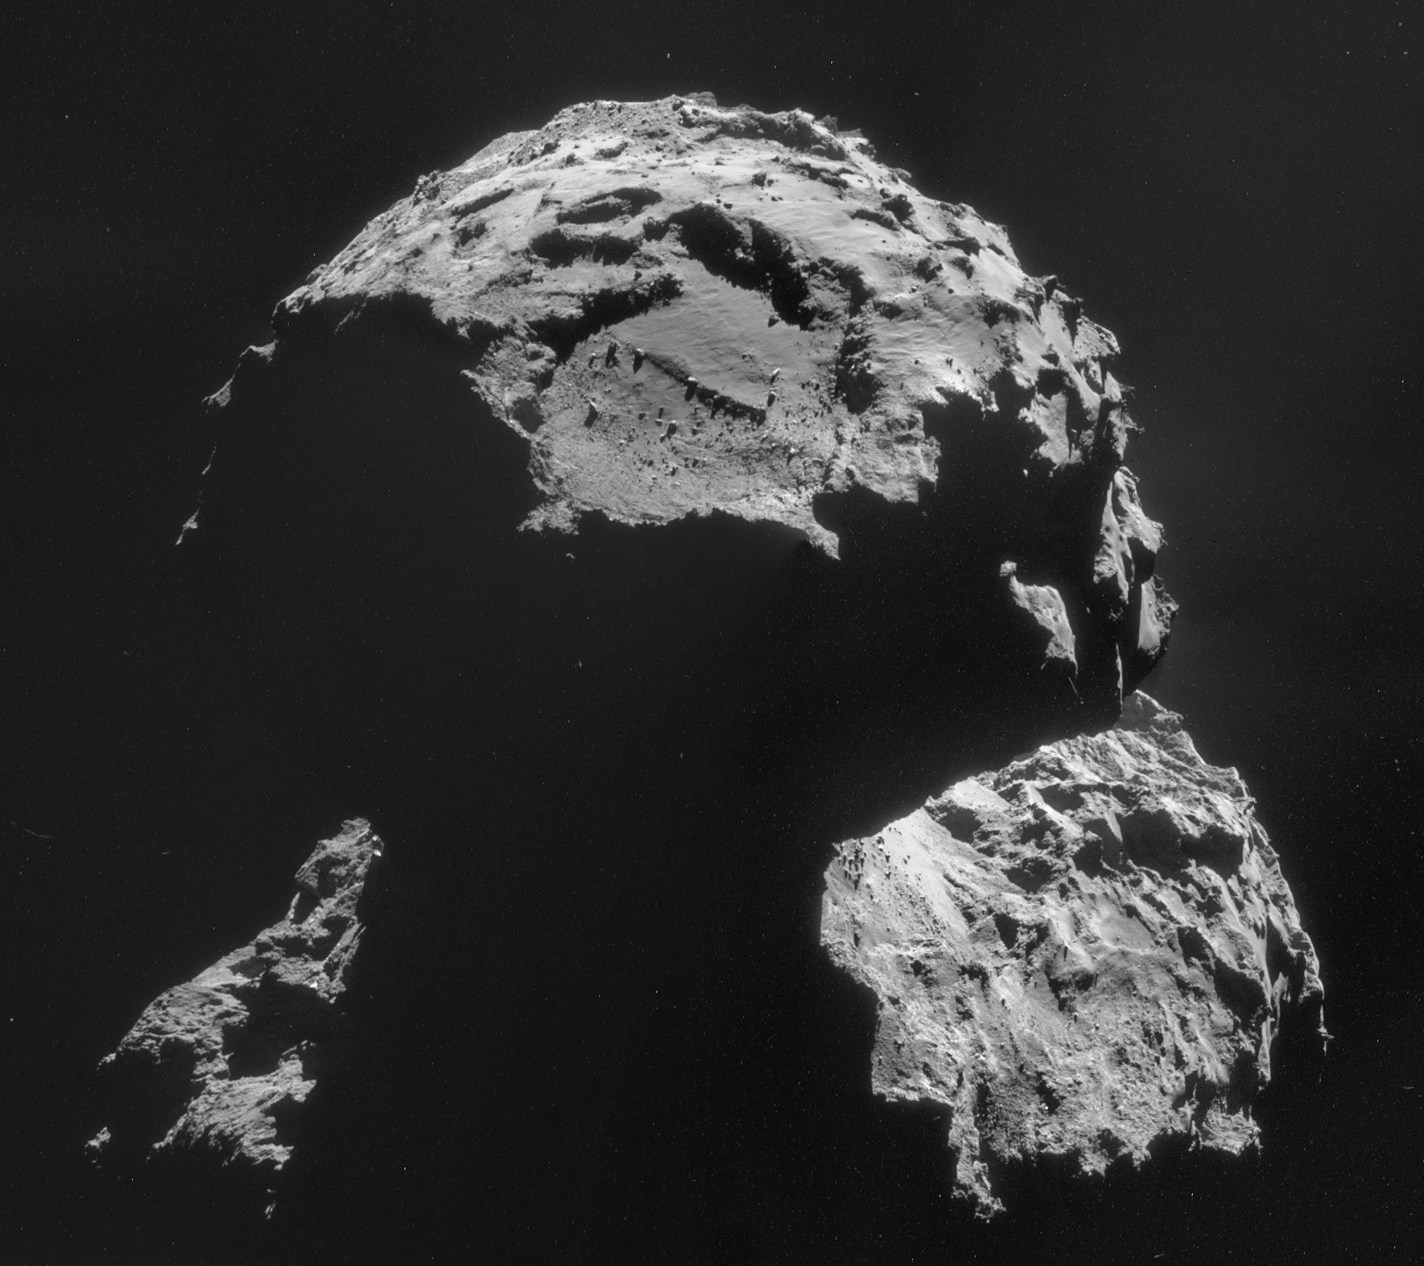 ESA_Rosetta_NAVCAM_141106_Mosaic.jpg